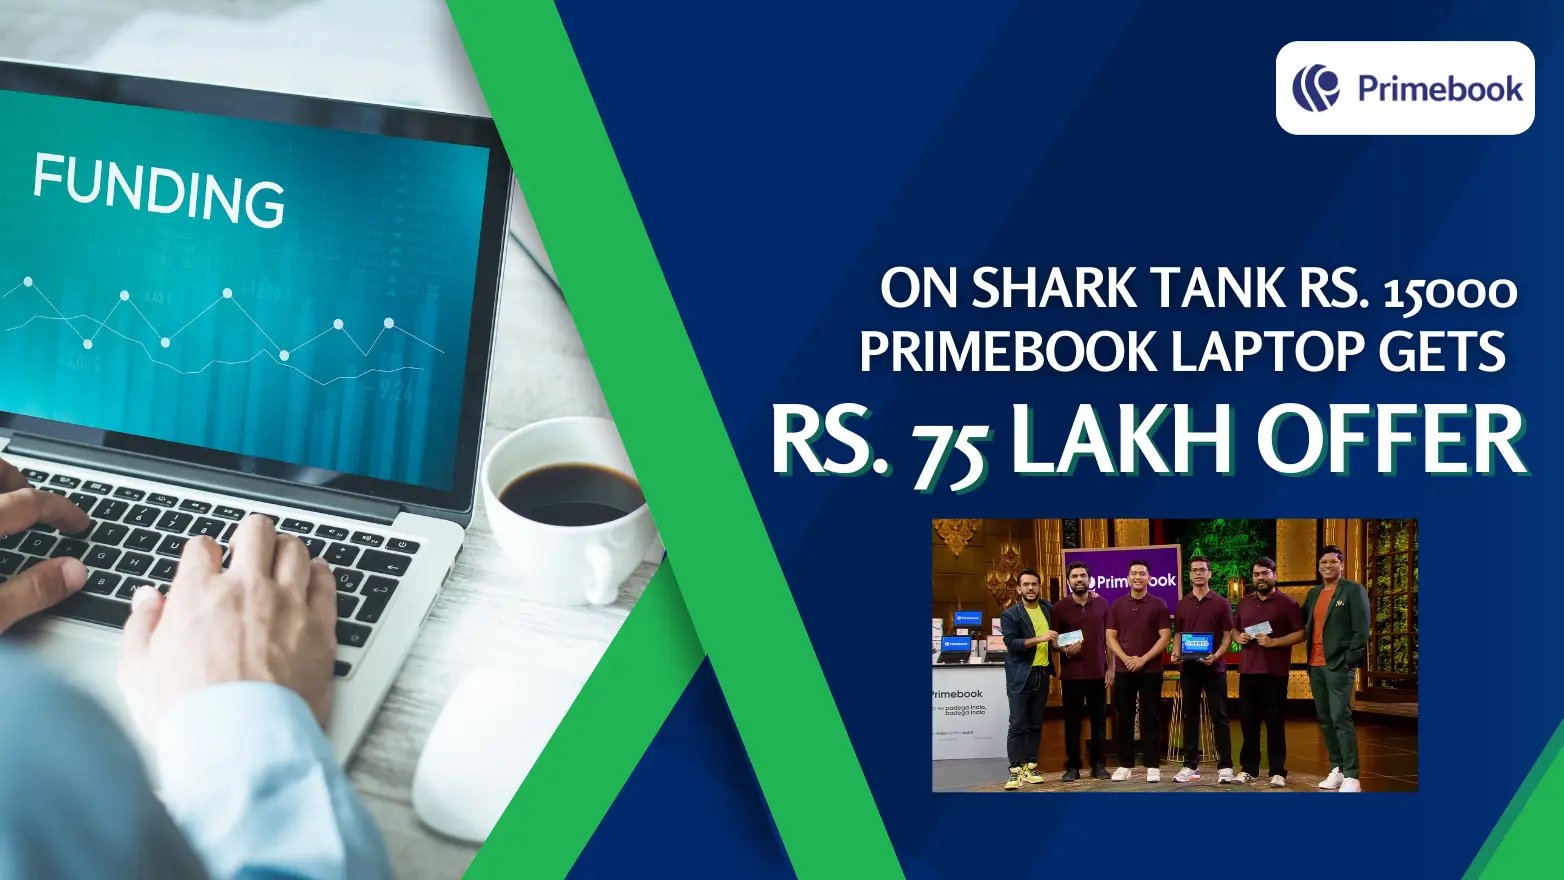 On Shark Tank Rs 15000 Primebook laptop gets Rs 75 lakh offer